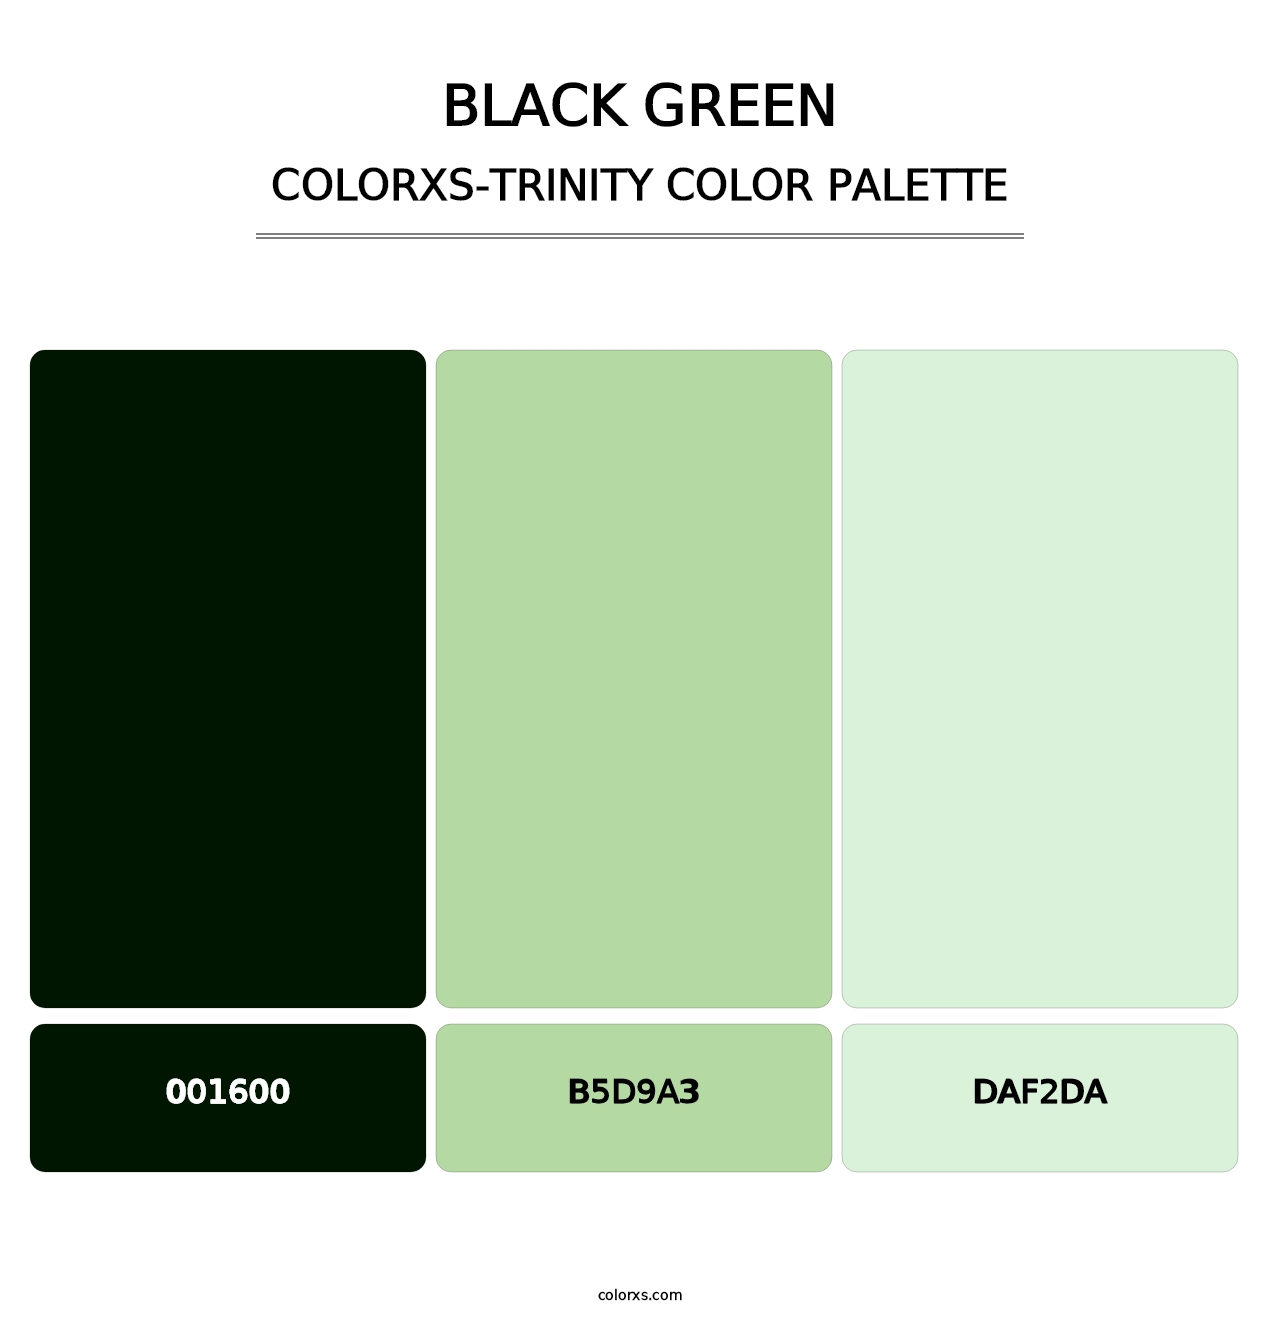 Black Green - Colorxs Trinity Palette